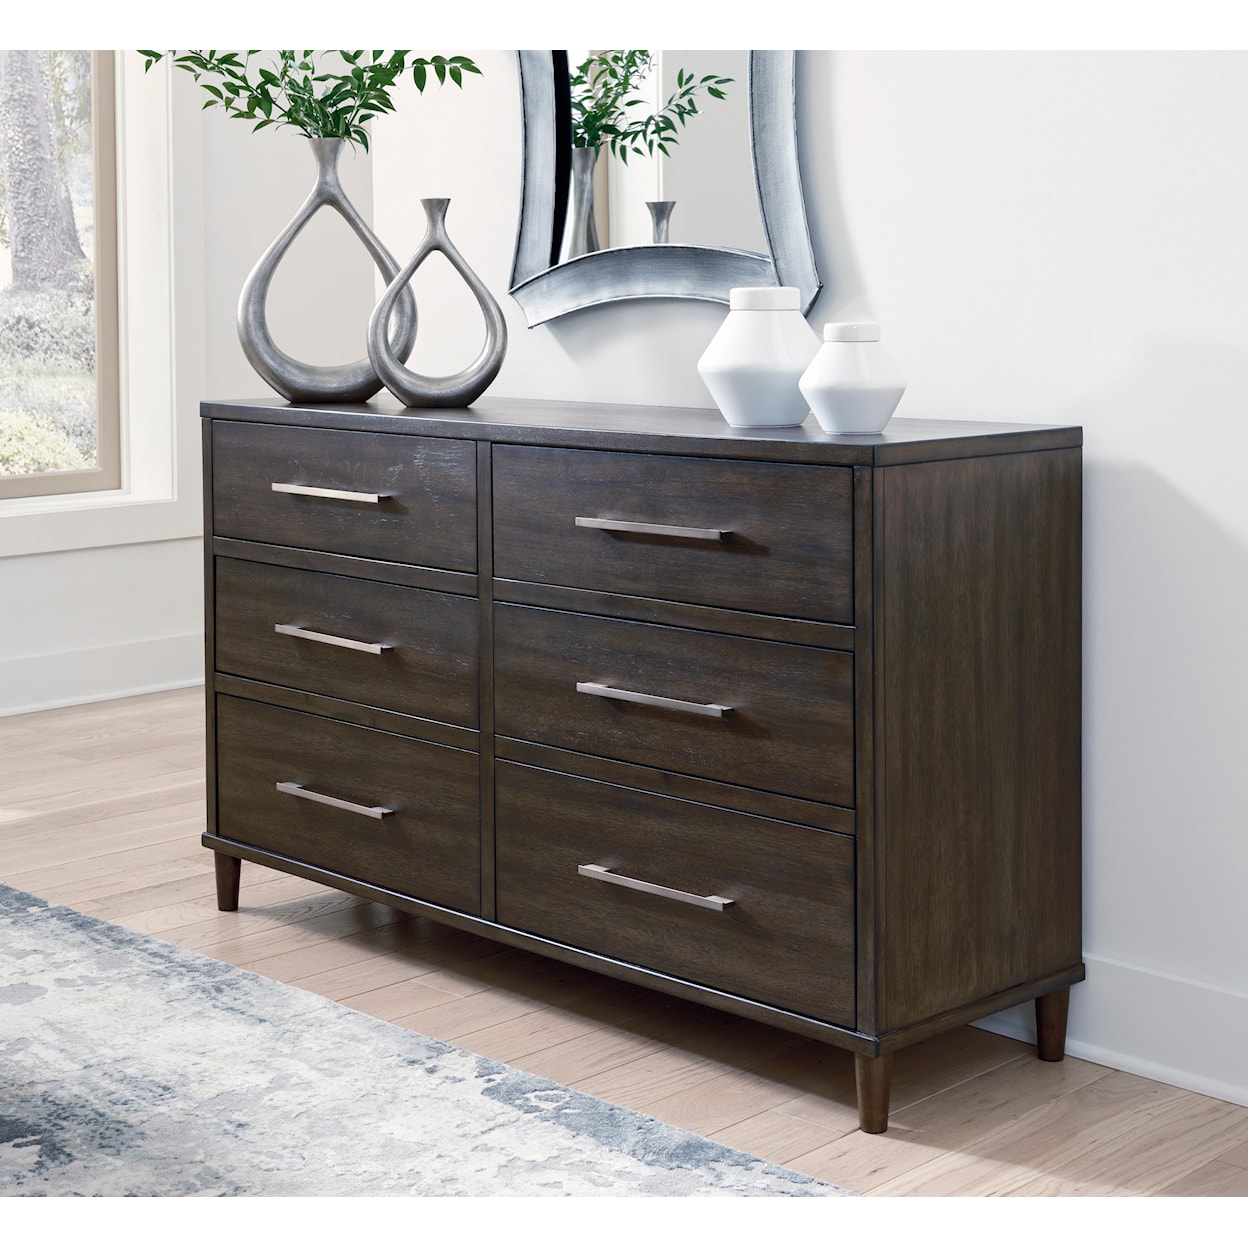 Ashley Furniture Signature Design Wittland 6-Drawer Dresser